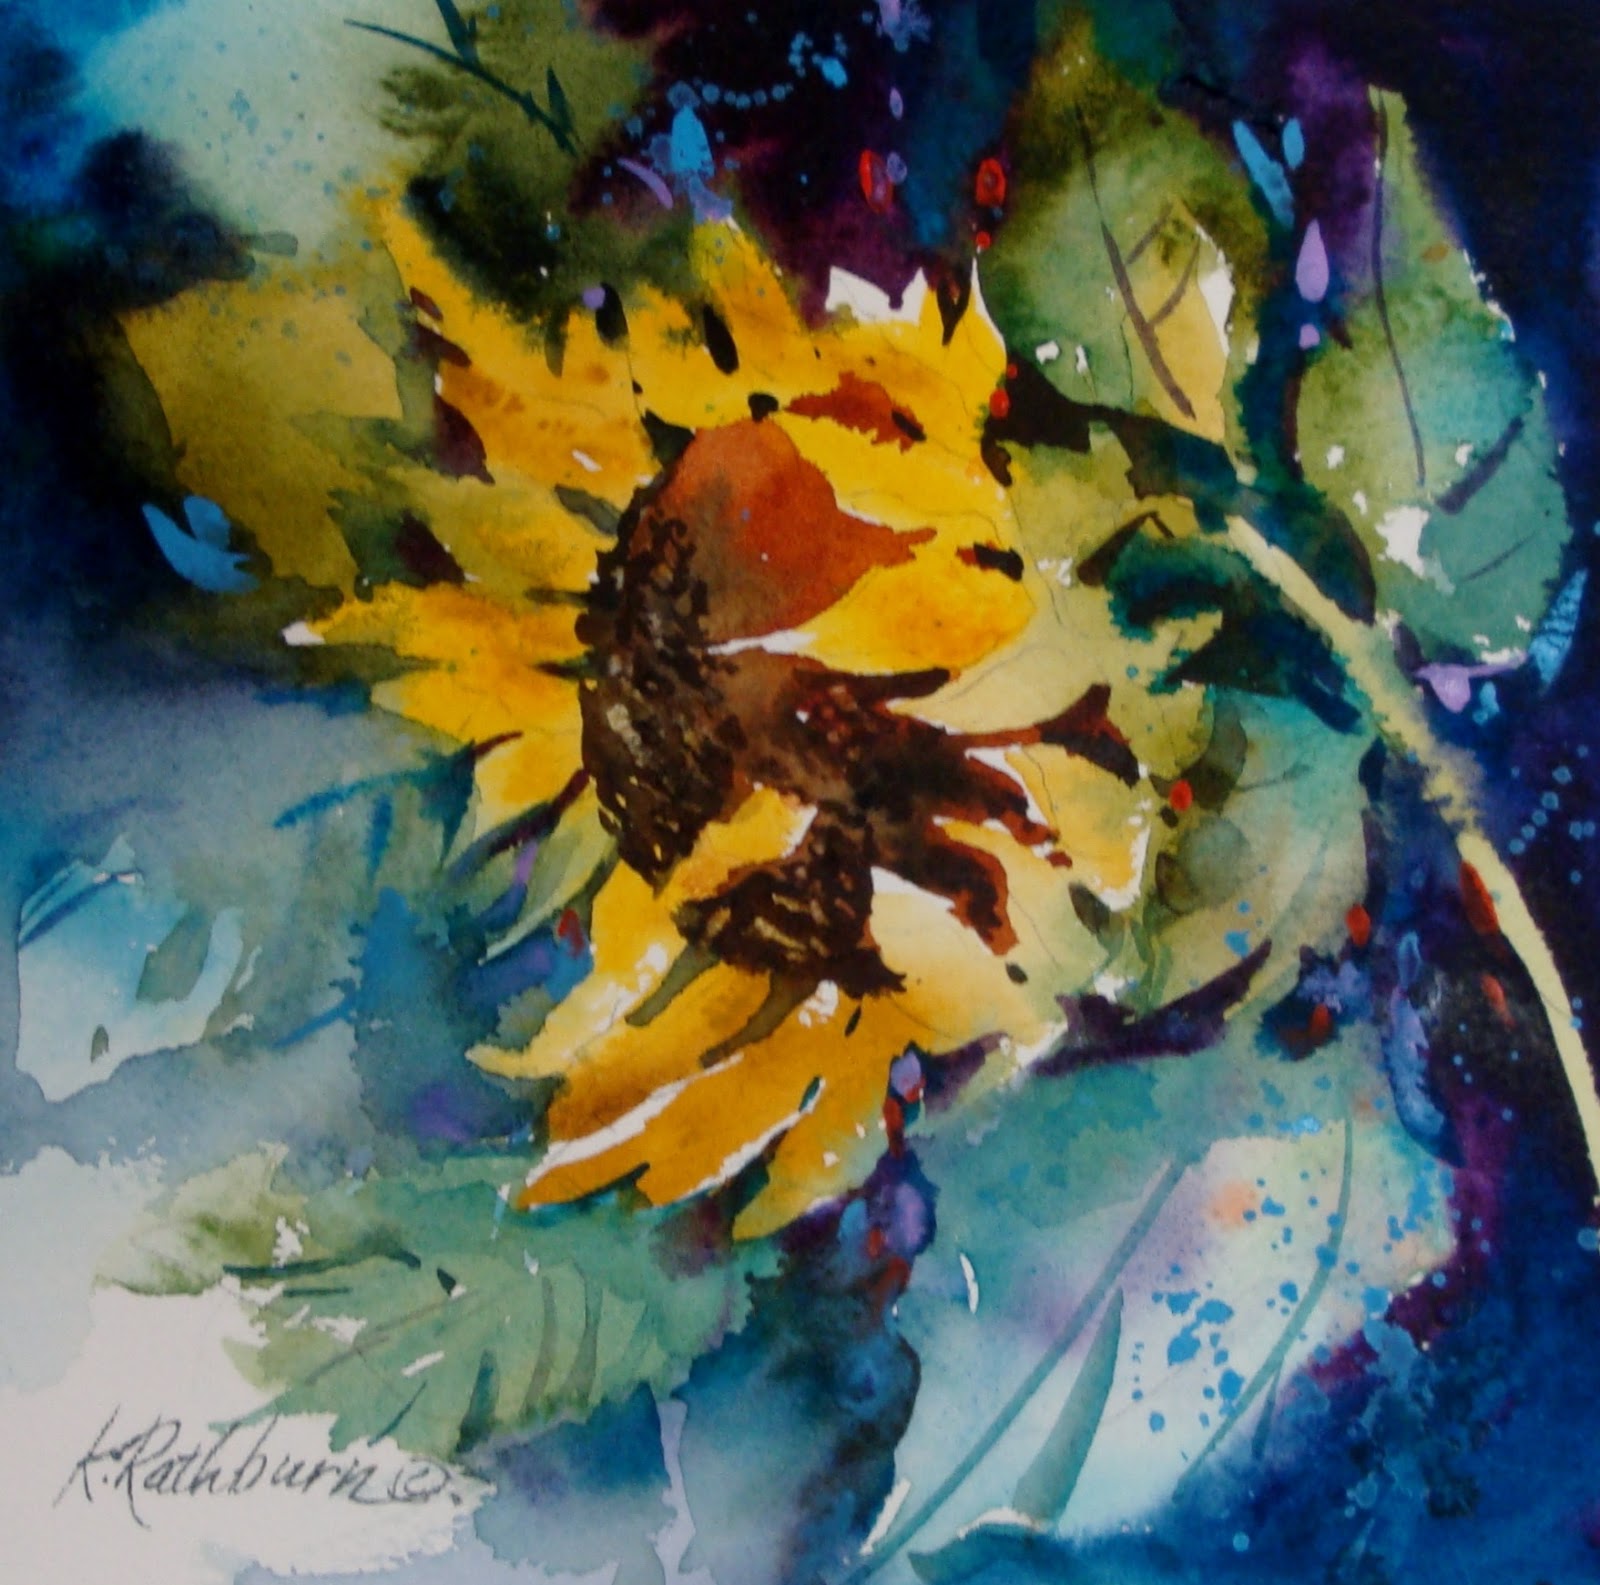 Kathy Los Rathburn Watercolorist Sunflower Series